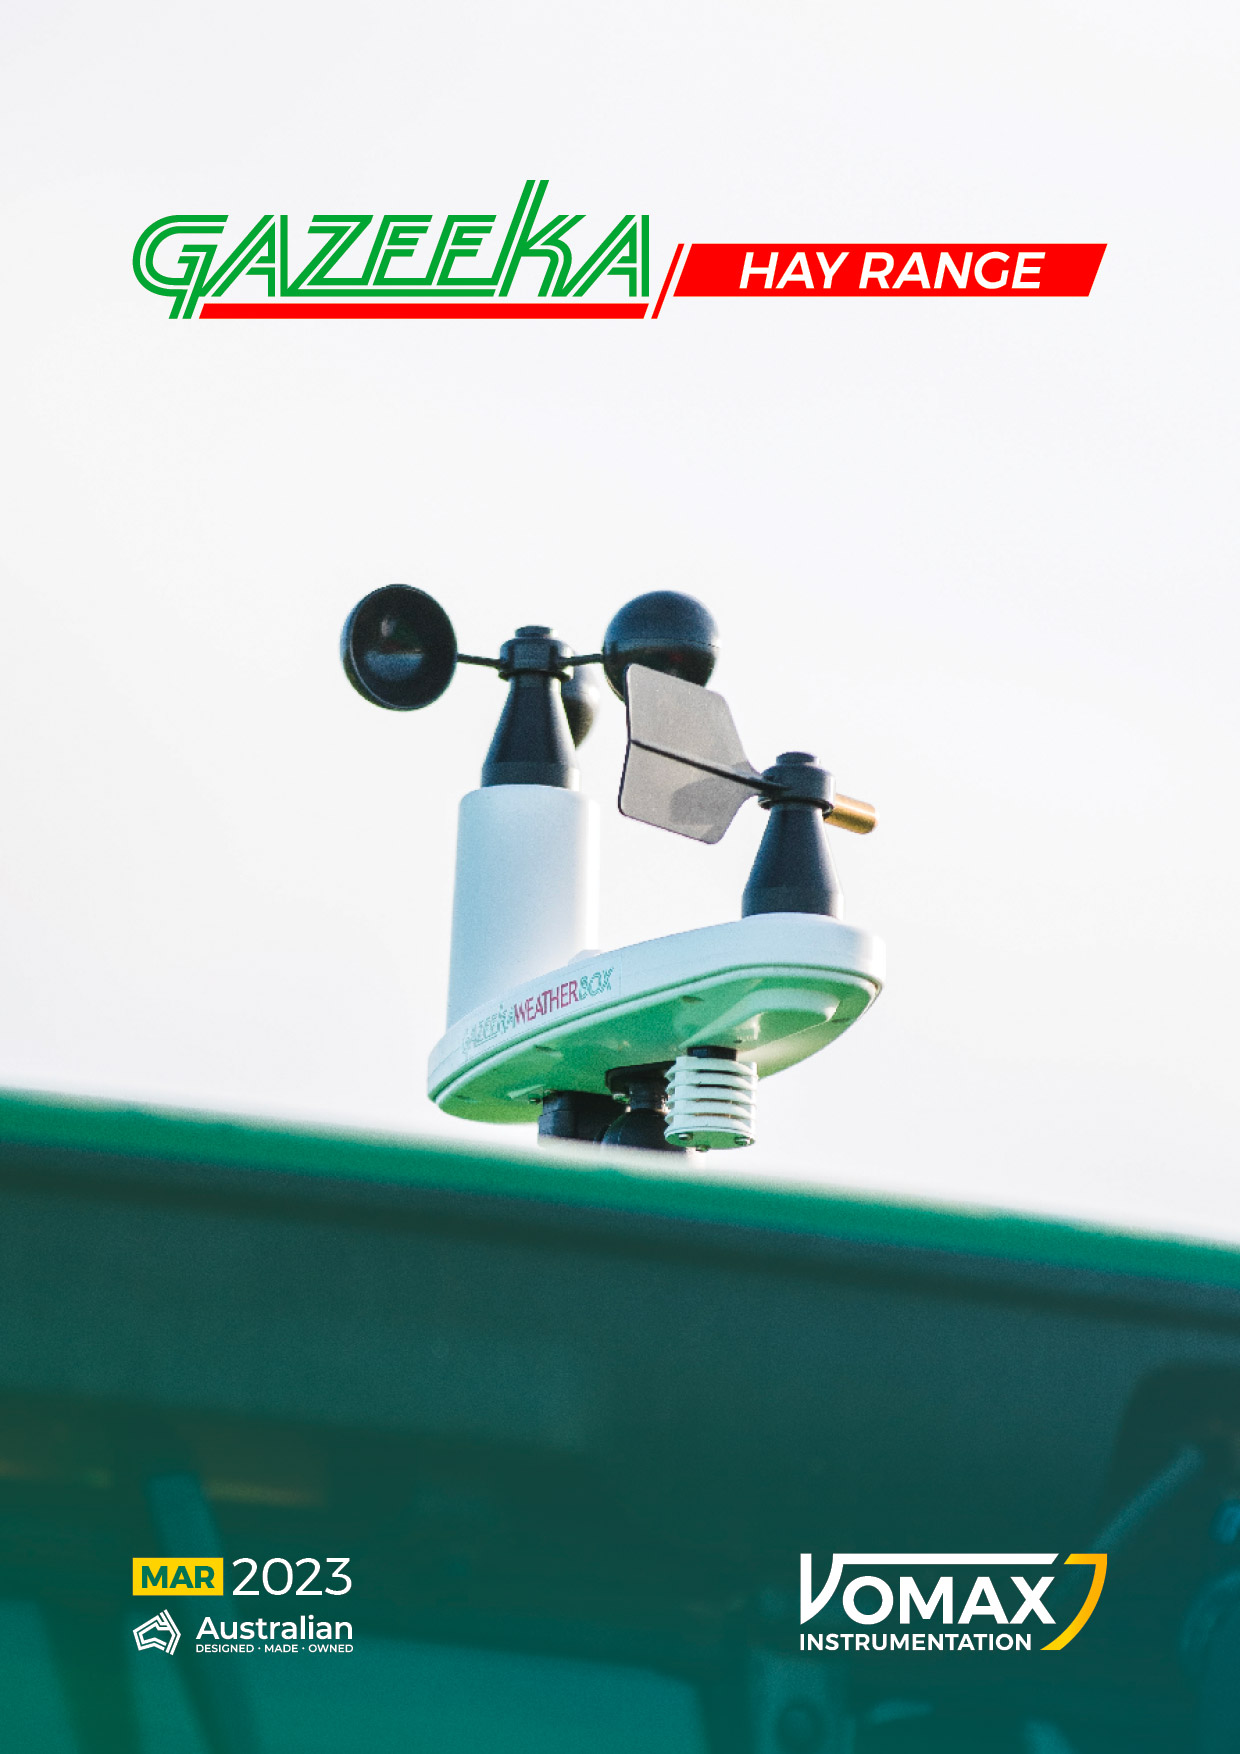 Au Market Gazeeka Hay Range Brochure cover, effective March 2023